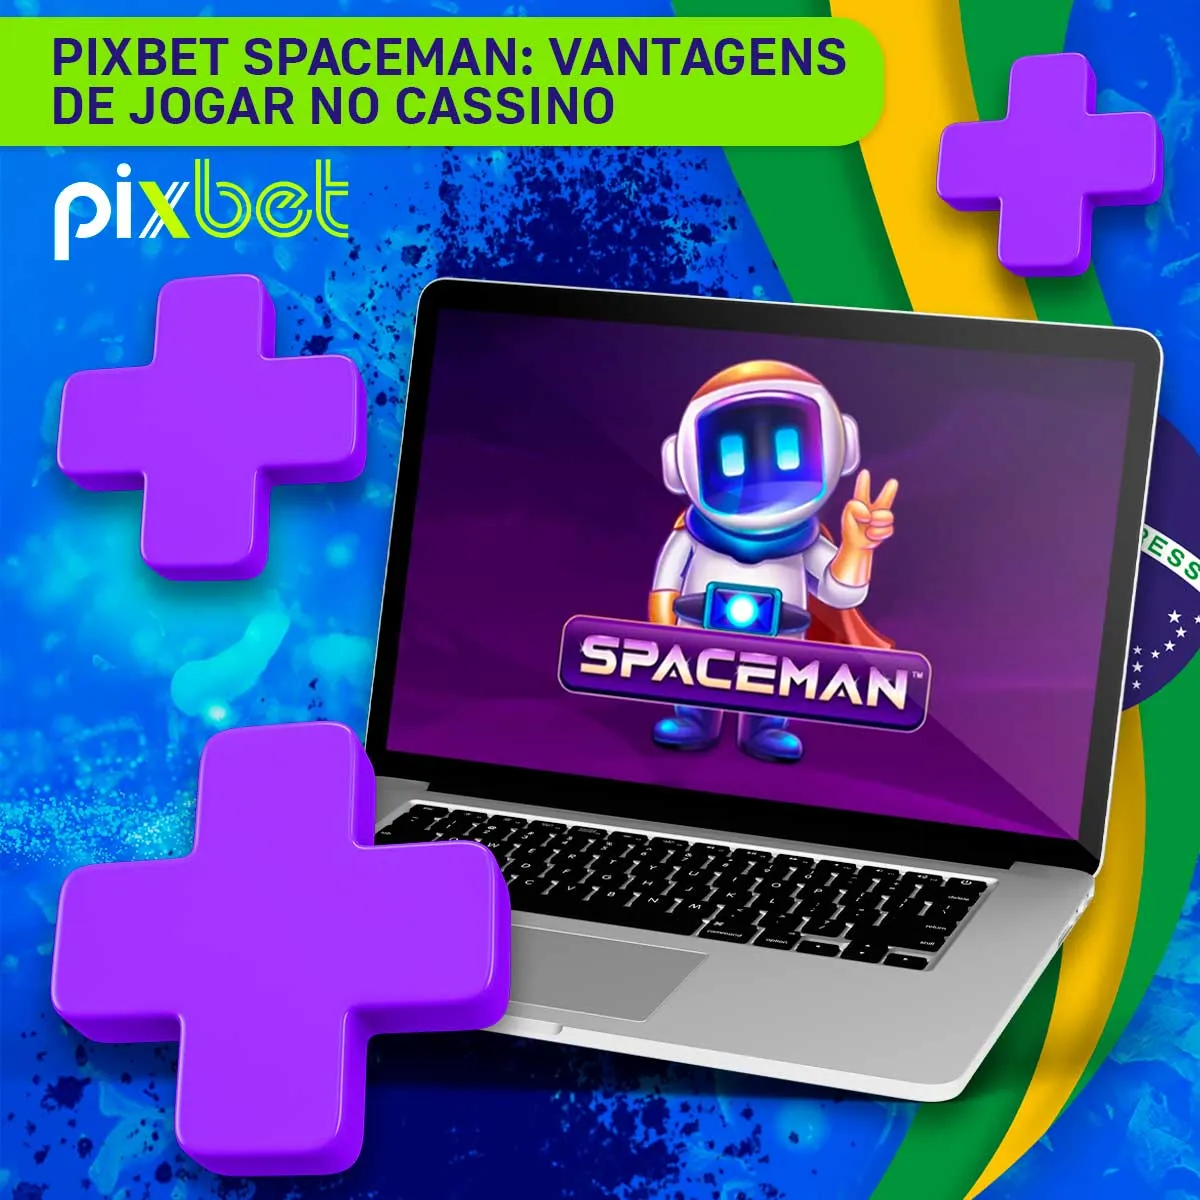 Vantagens de jogar na plataforma Pixbet Spaceman